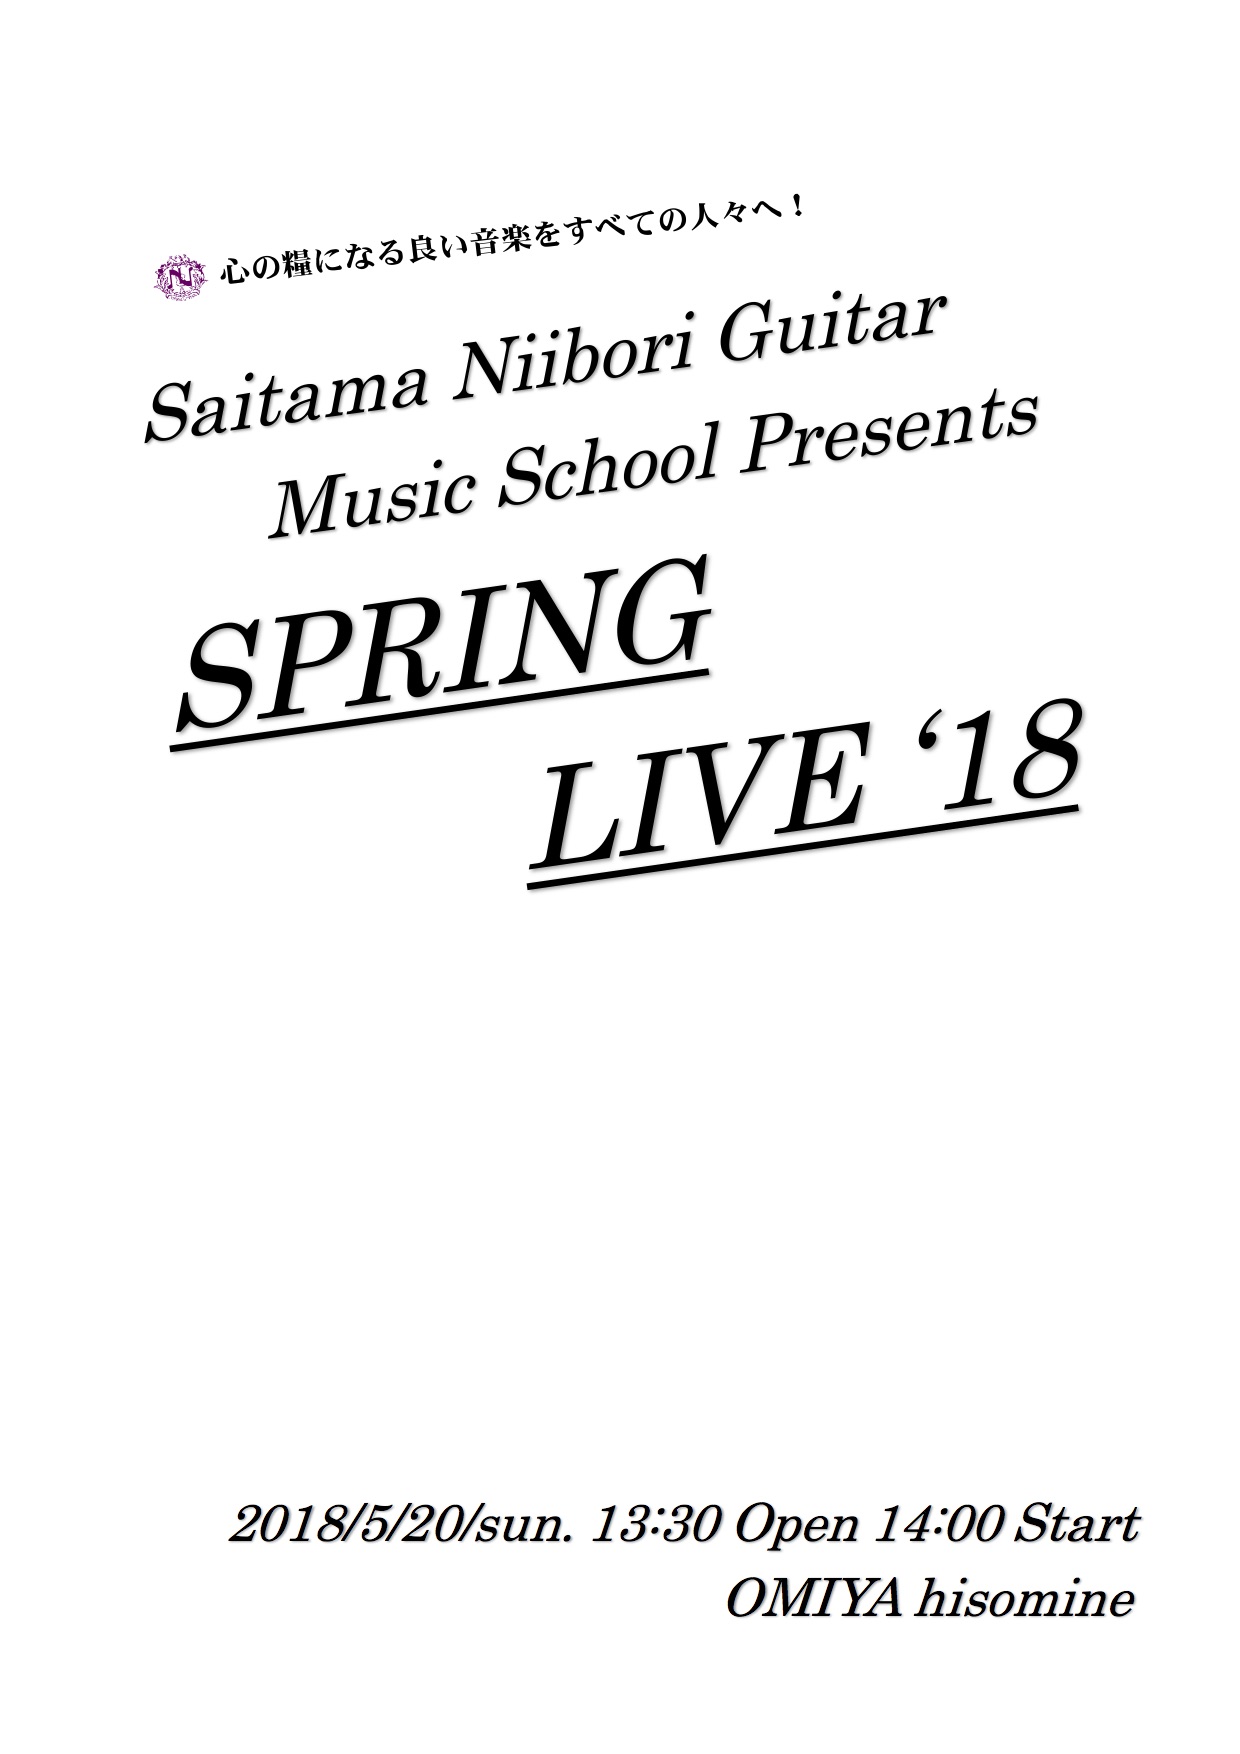 Saitama Niibori Guiter Music School Presents SPRING LIVE'18